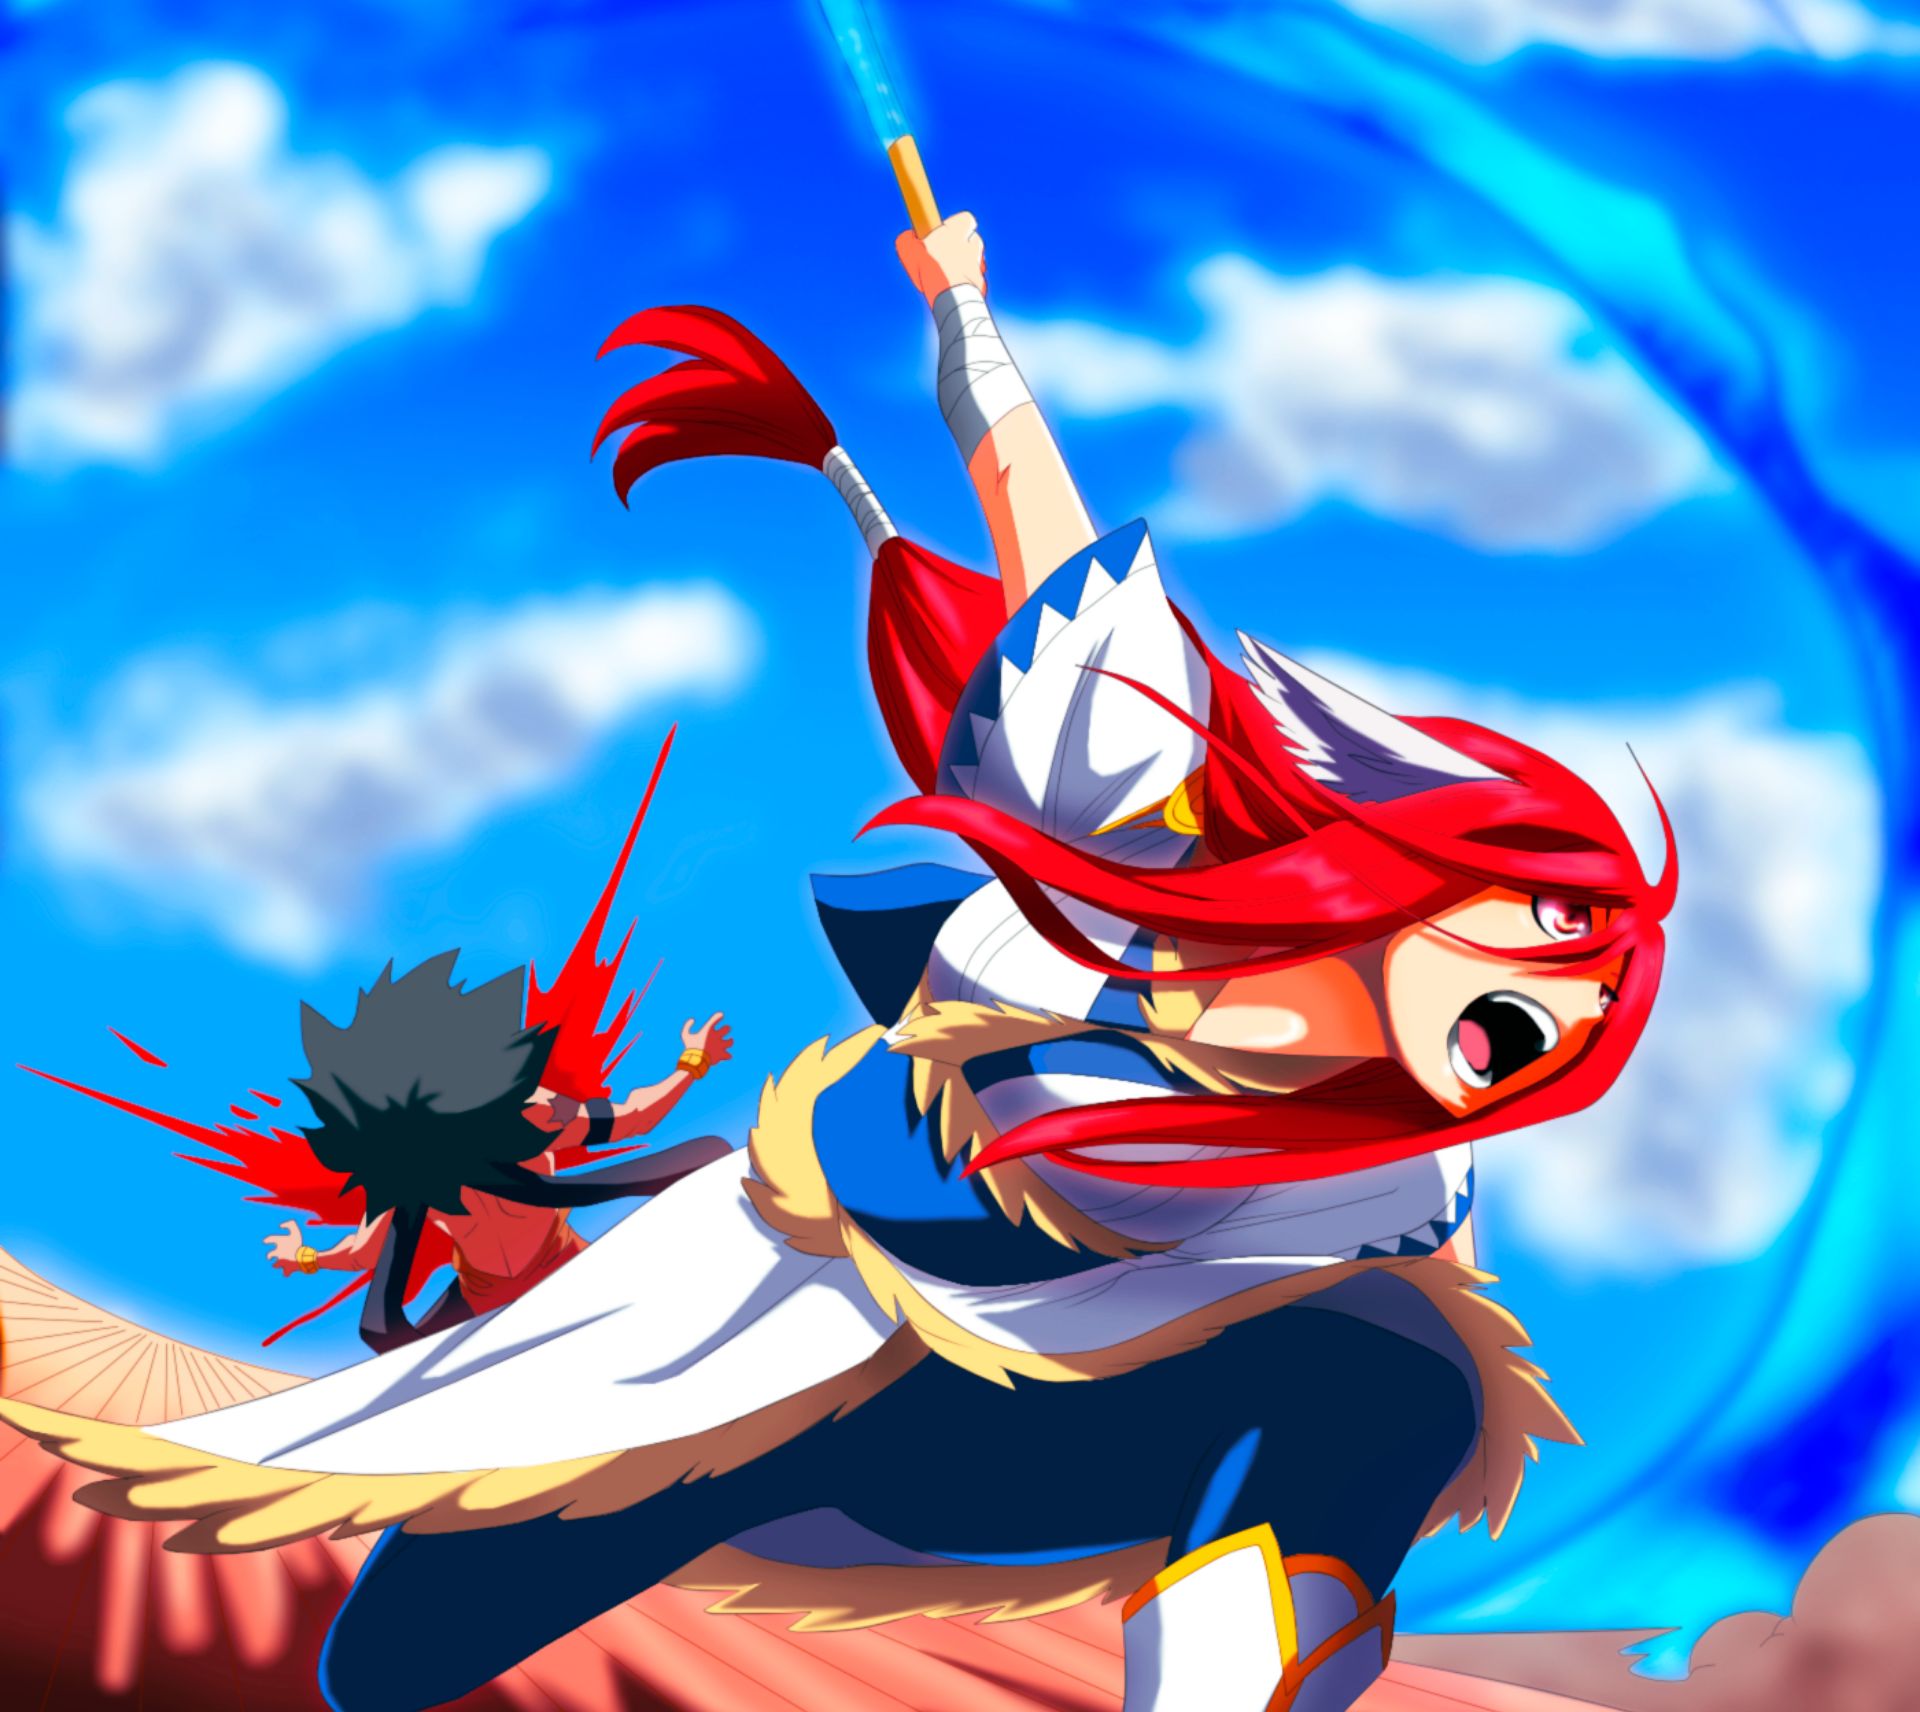 Descarga gratuita de fondo de pantalla para móvil de Fairy Tail, Animado, Erza Scarlet.